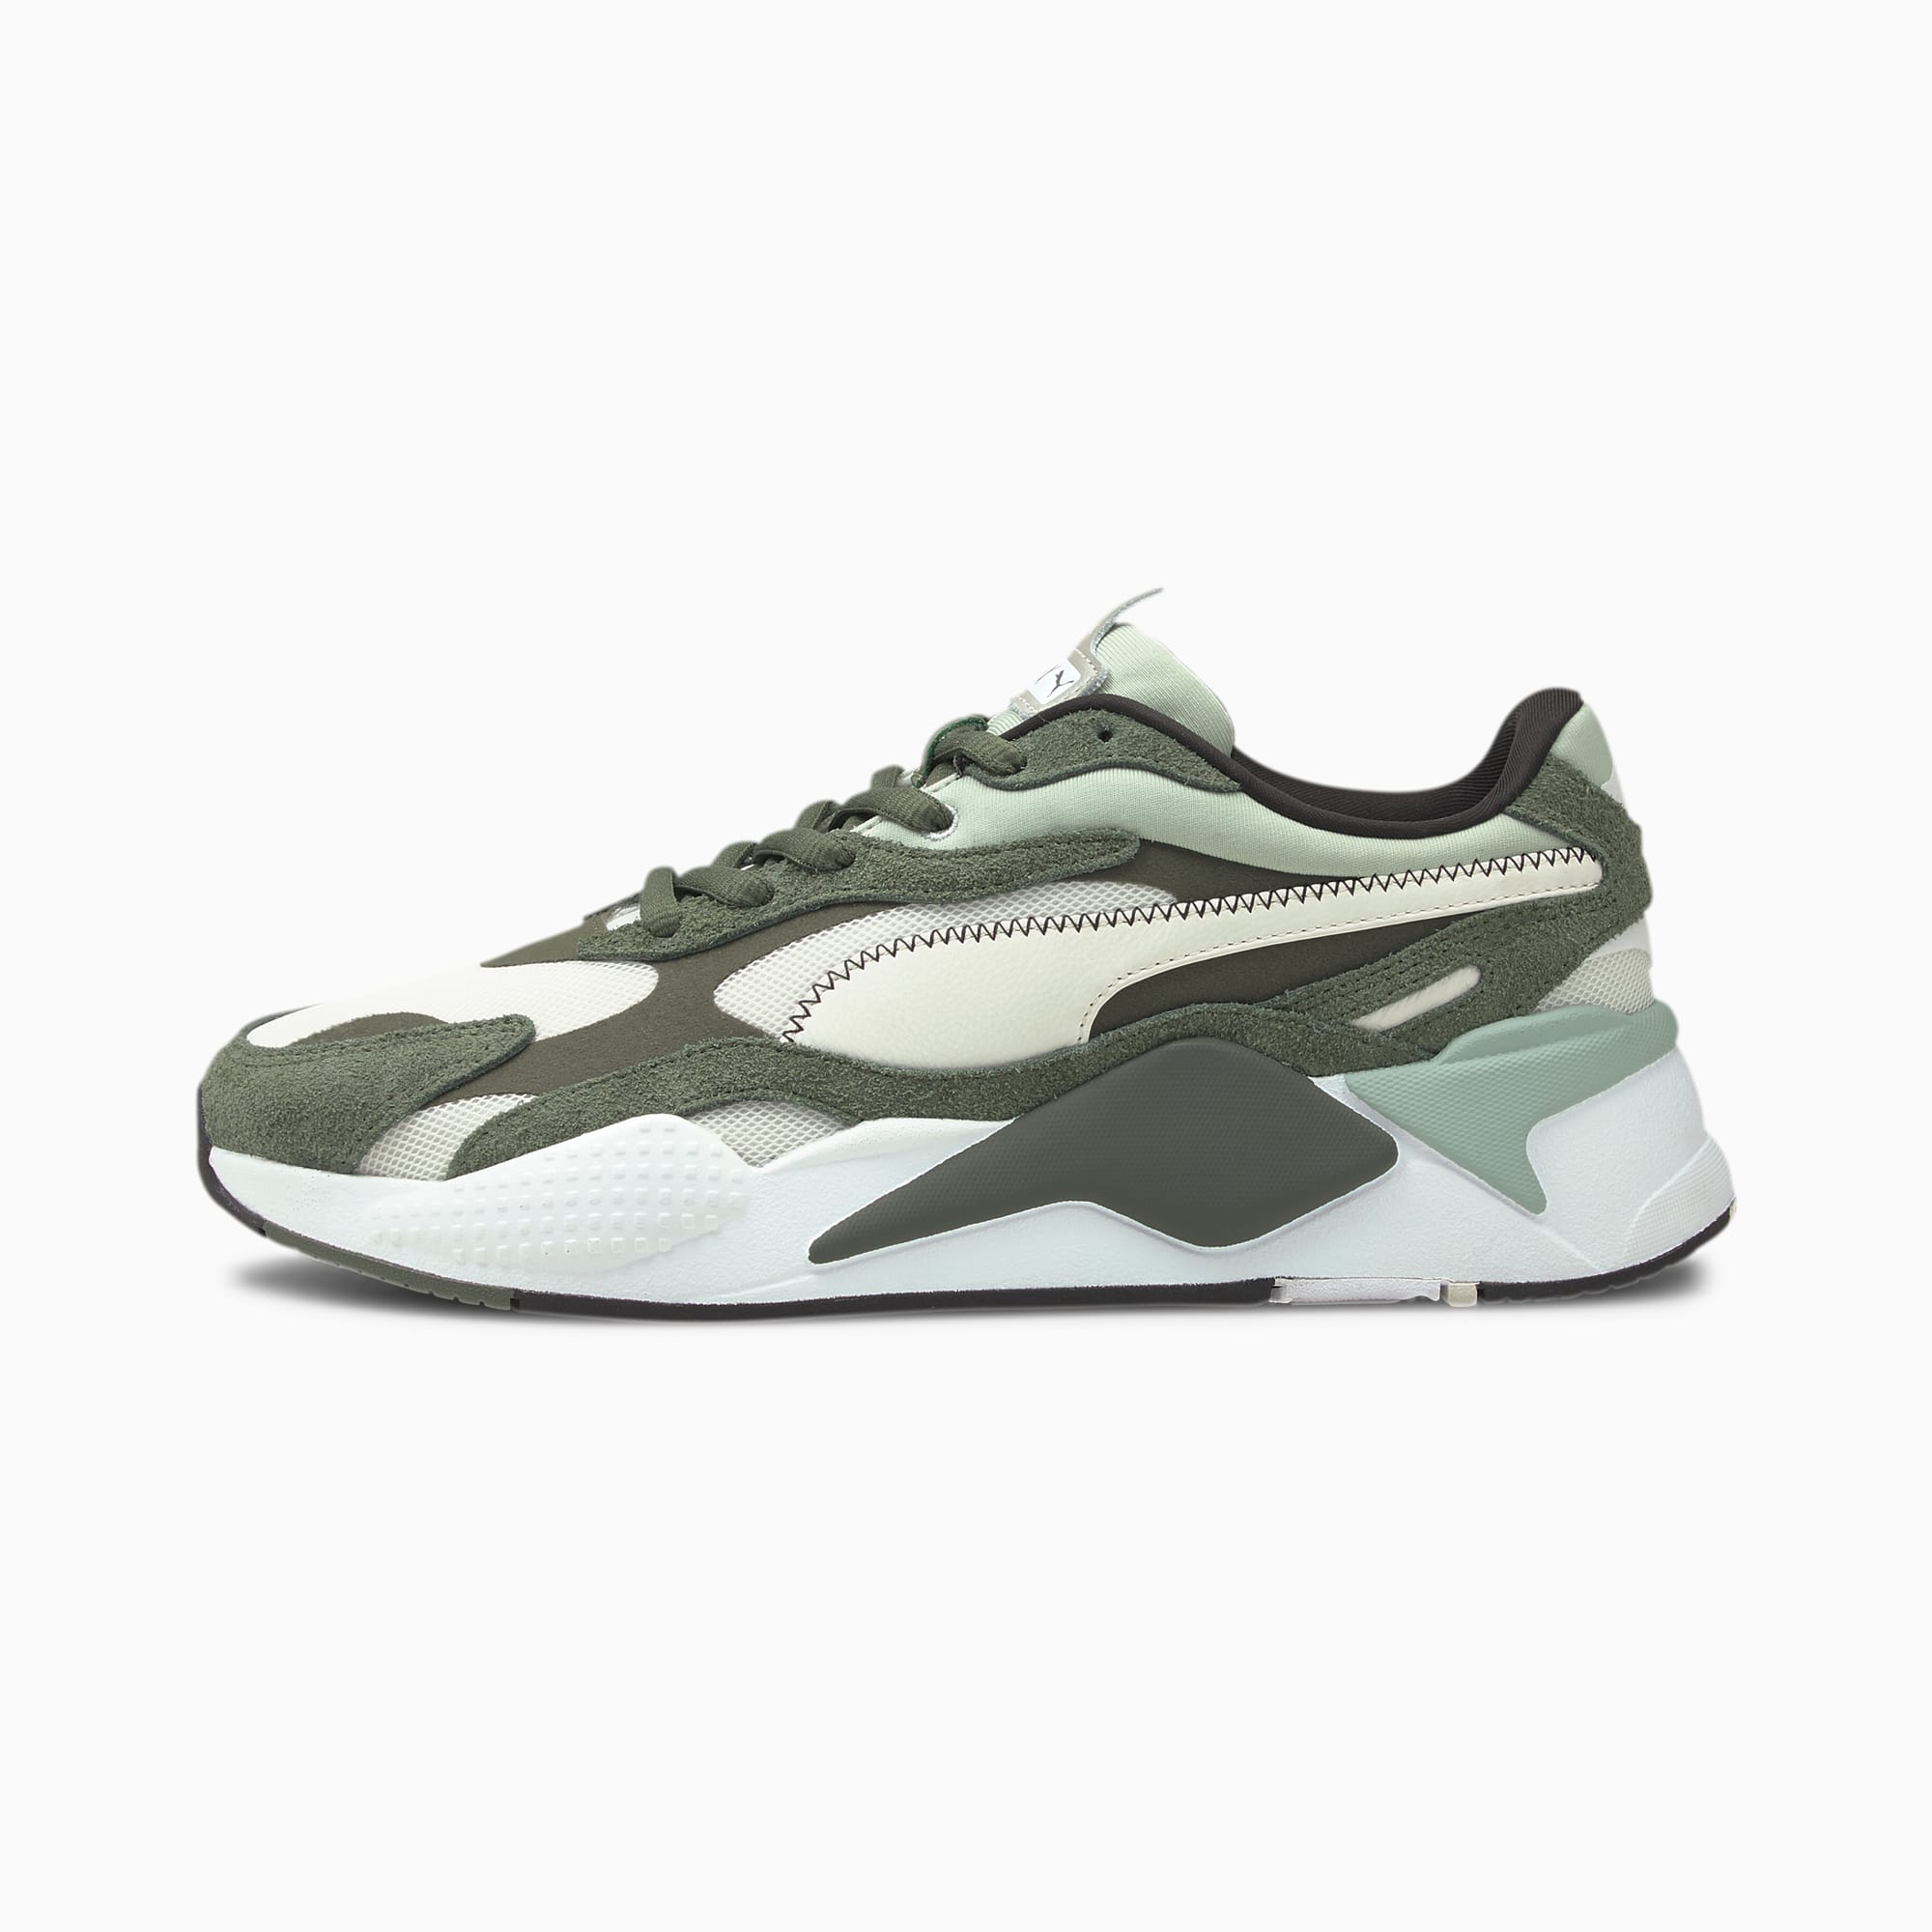 PUMA RS-X CAMO Sneaker Schuhe | Mit Aucun | Grau/Grün | Größe: 47